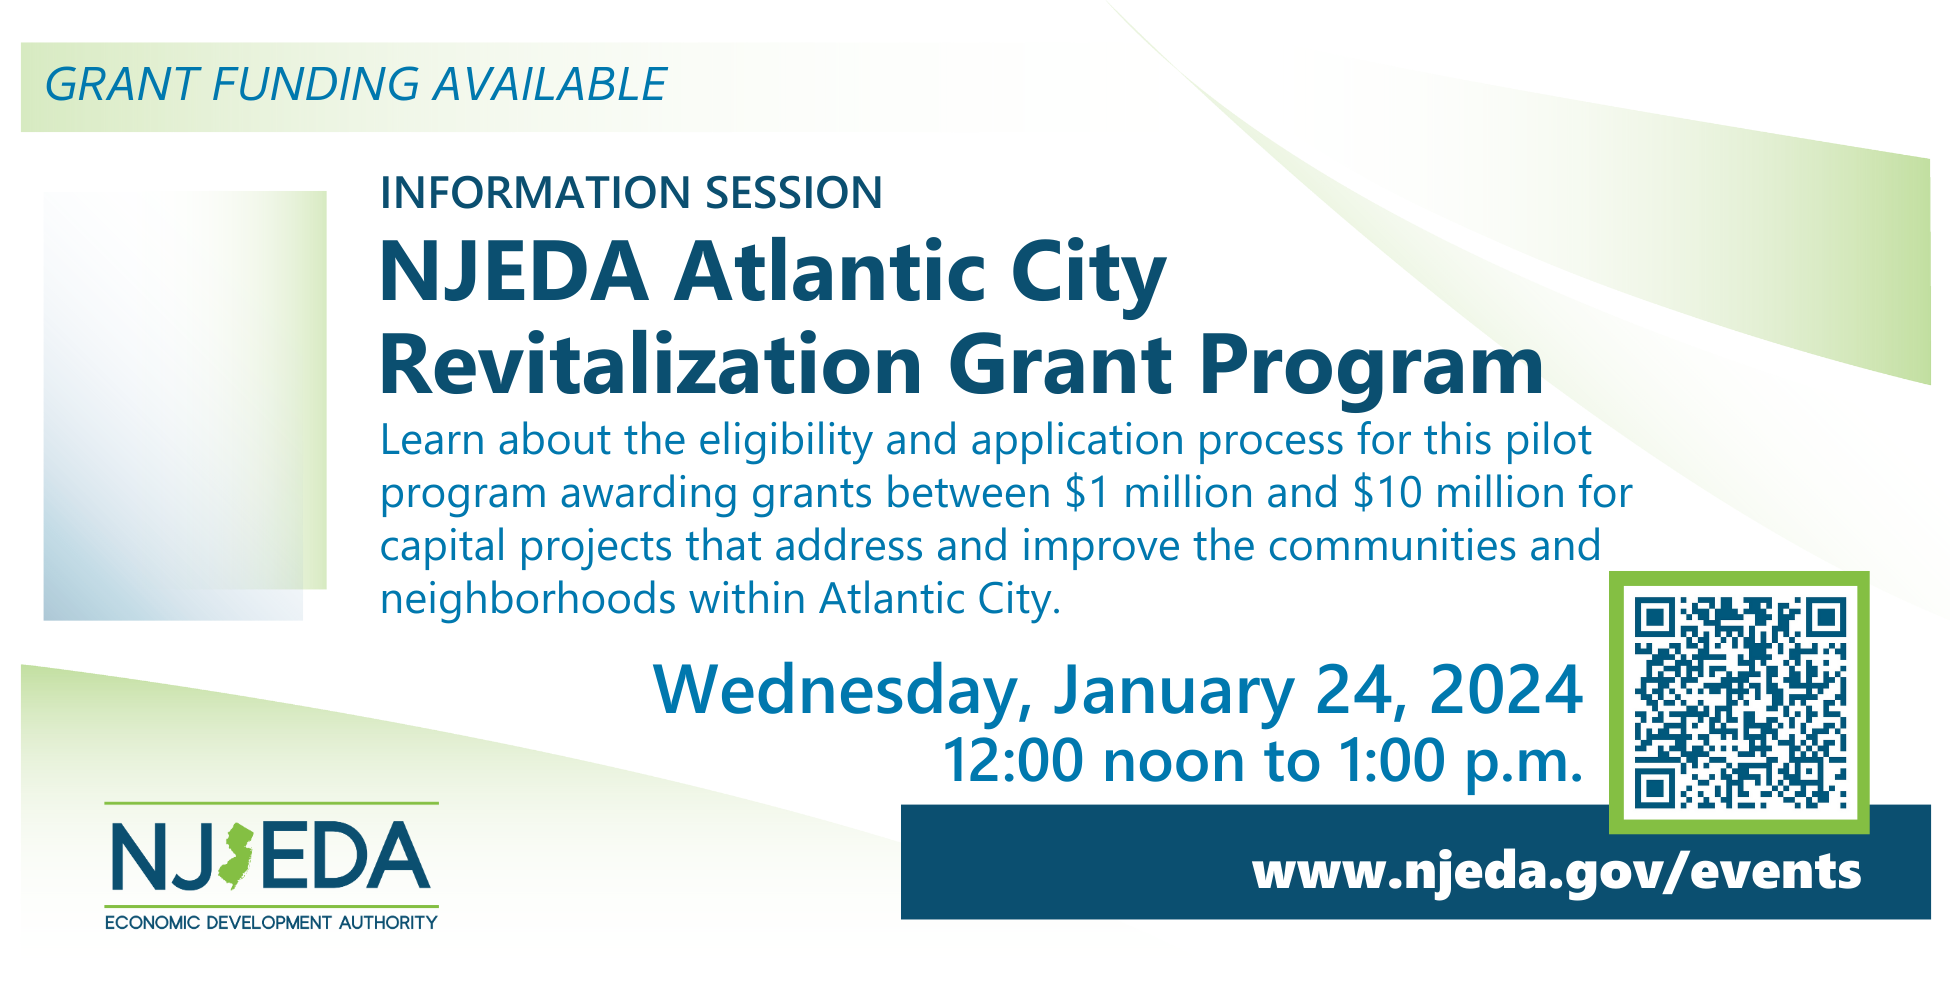 Grant Funding Available - Information Session NJEDA Atlantic City Revitalization Grant Program Wed. January 24, 2024 Noon - 1 PM. njeda.gov/events